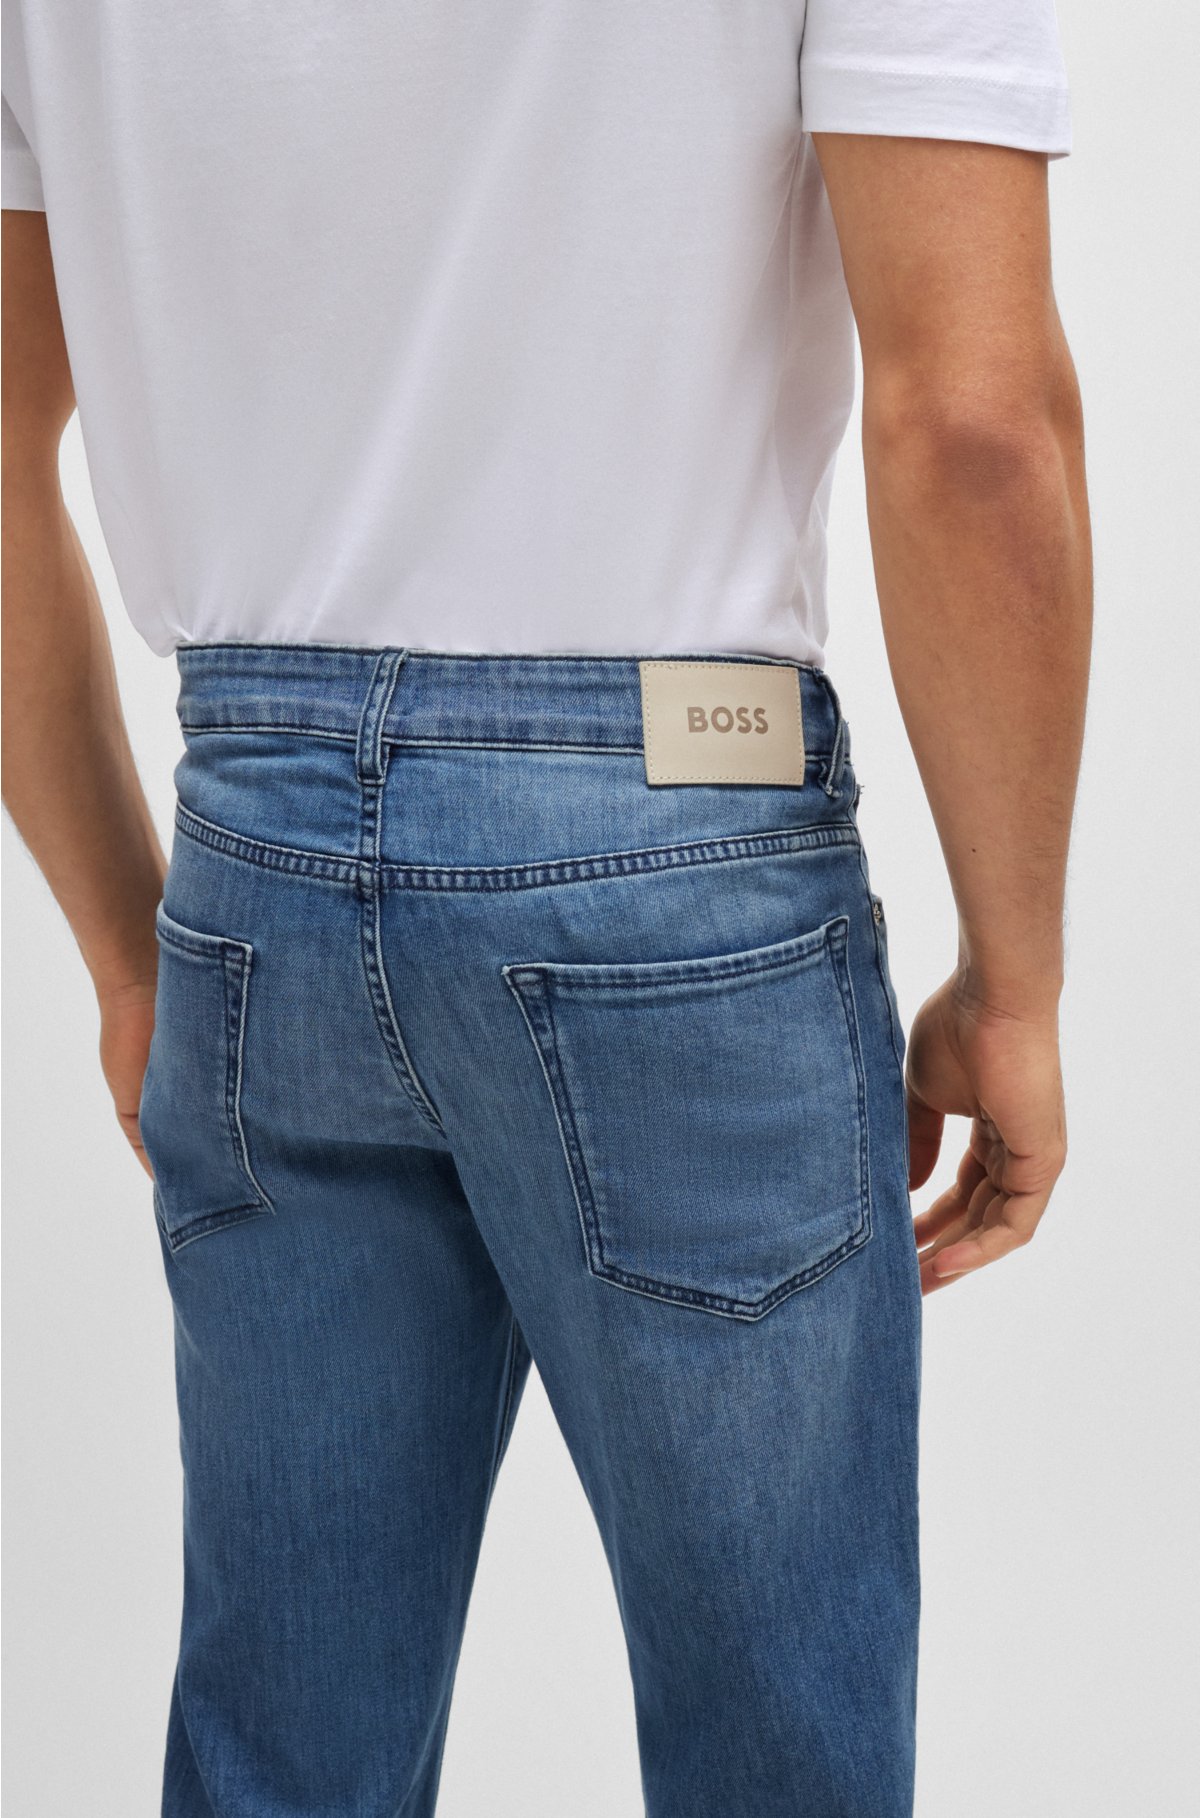 Regular-fit jeans in blue comfort-stretch denim